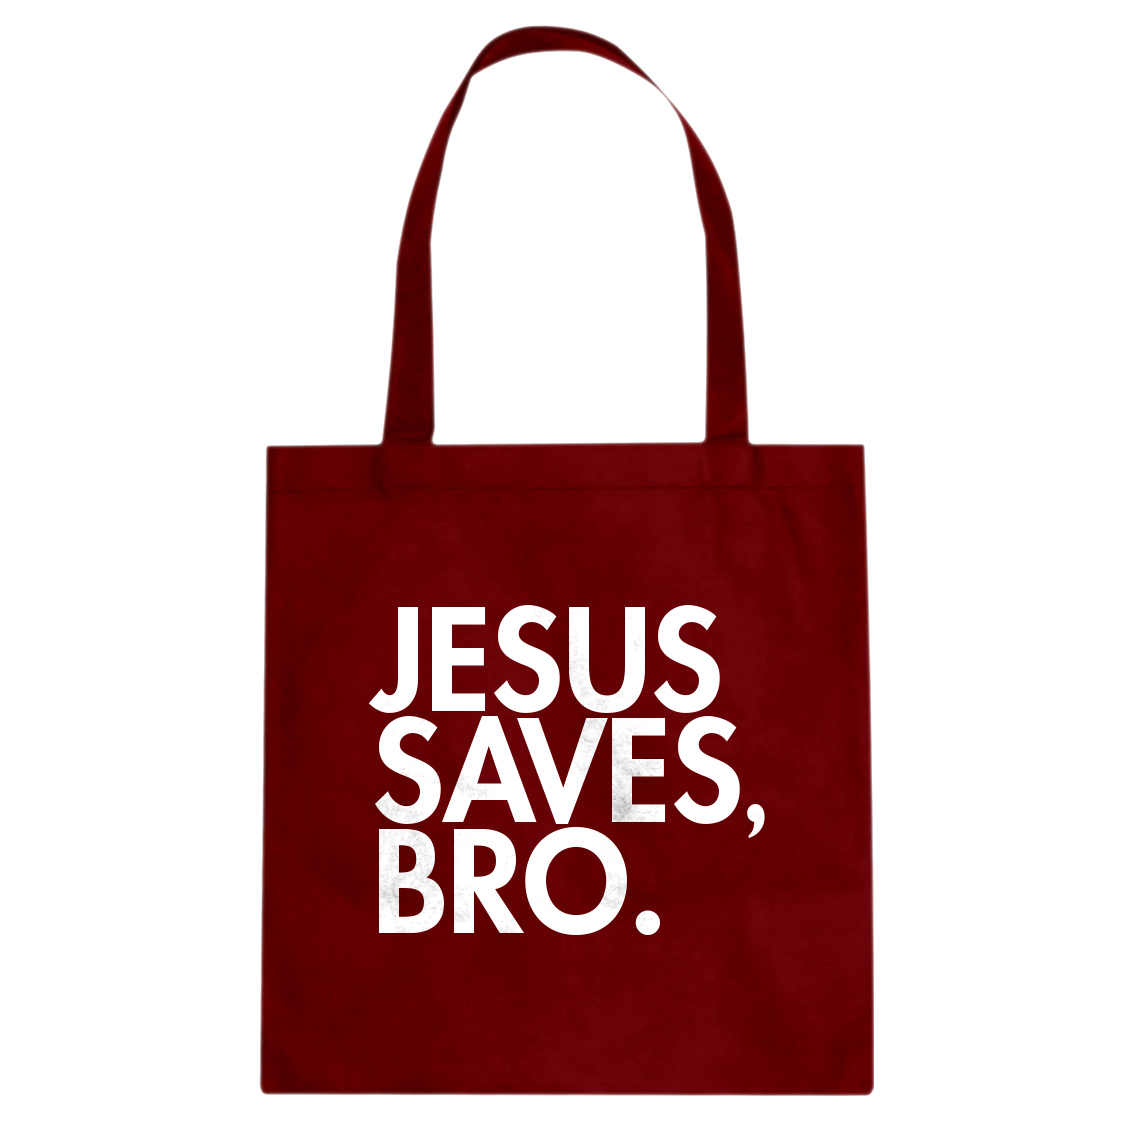 Jesus Saves Bro Cotton Canvas Tote Bag #3077 | eBay